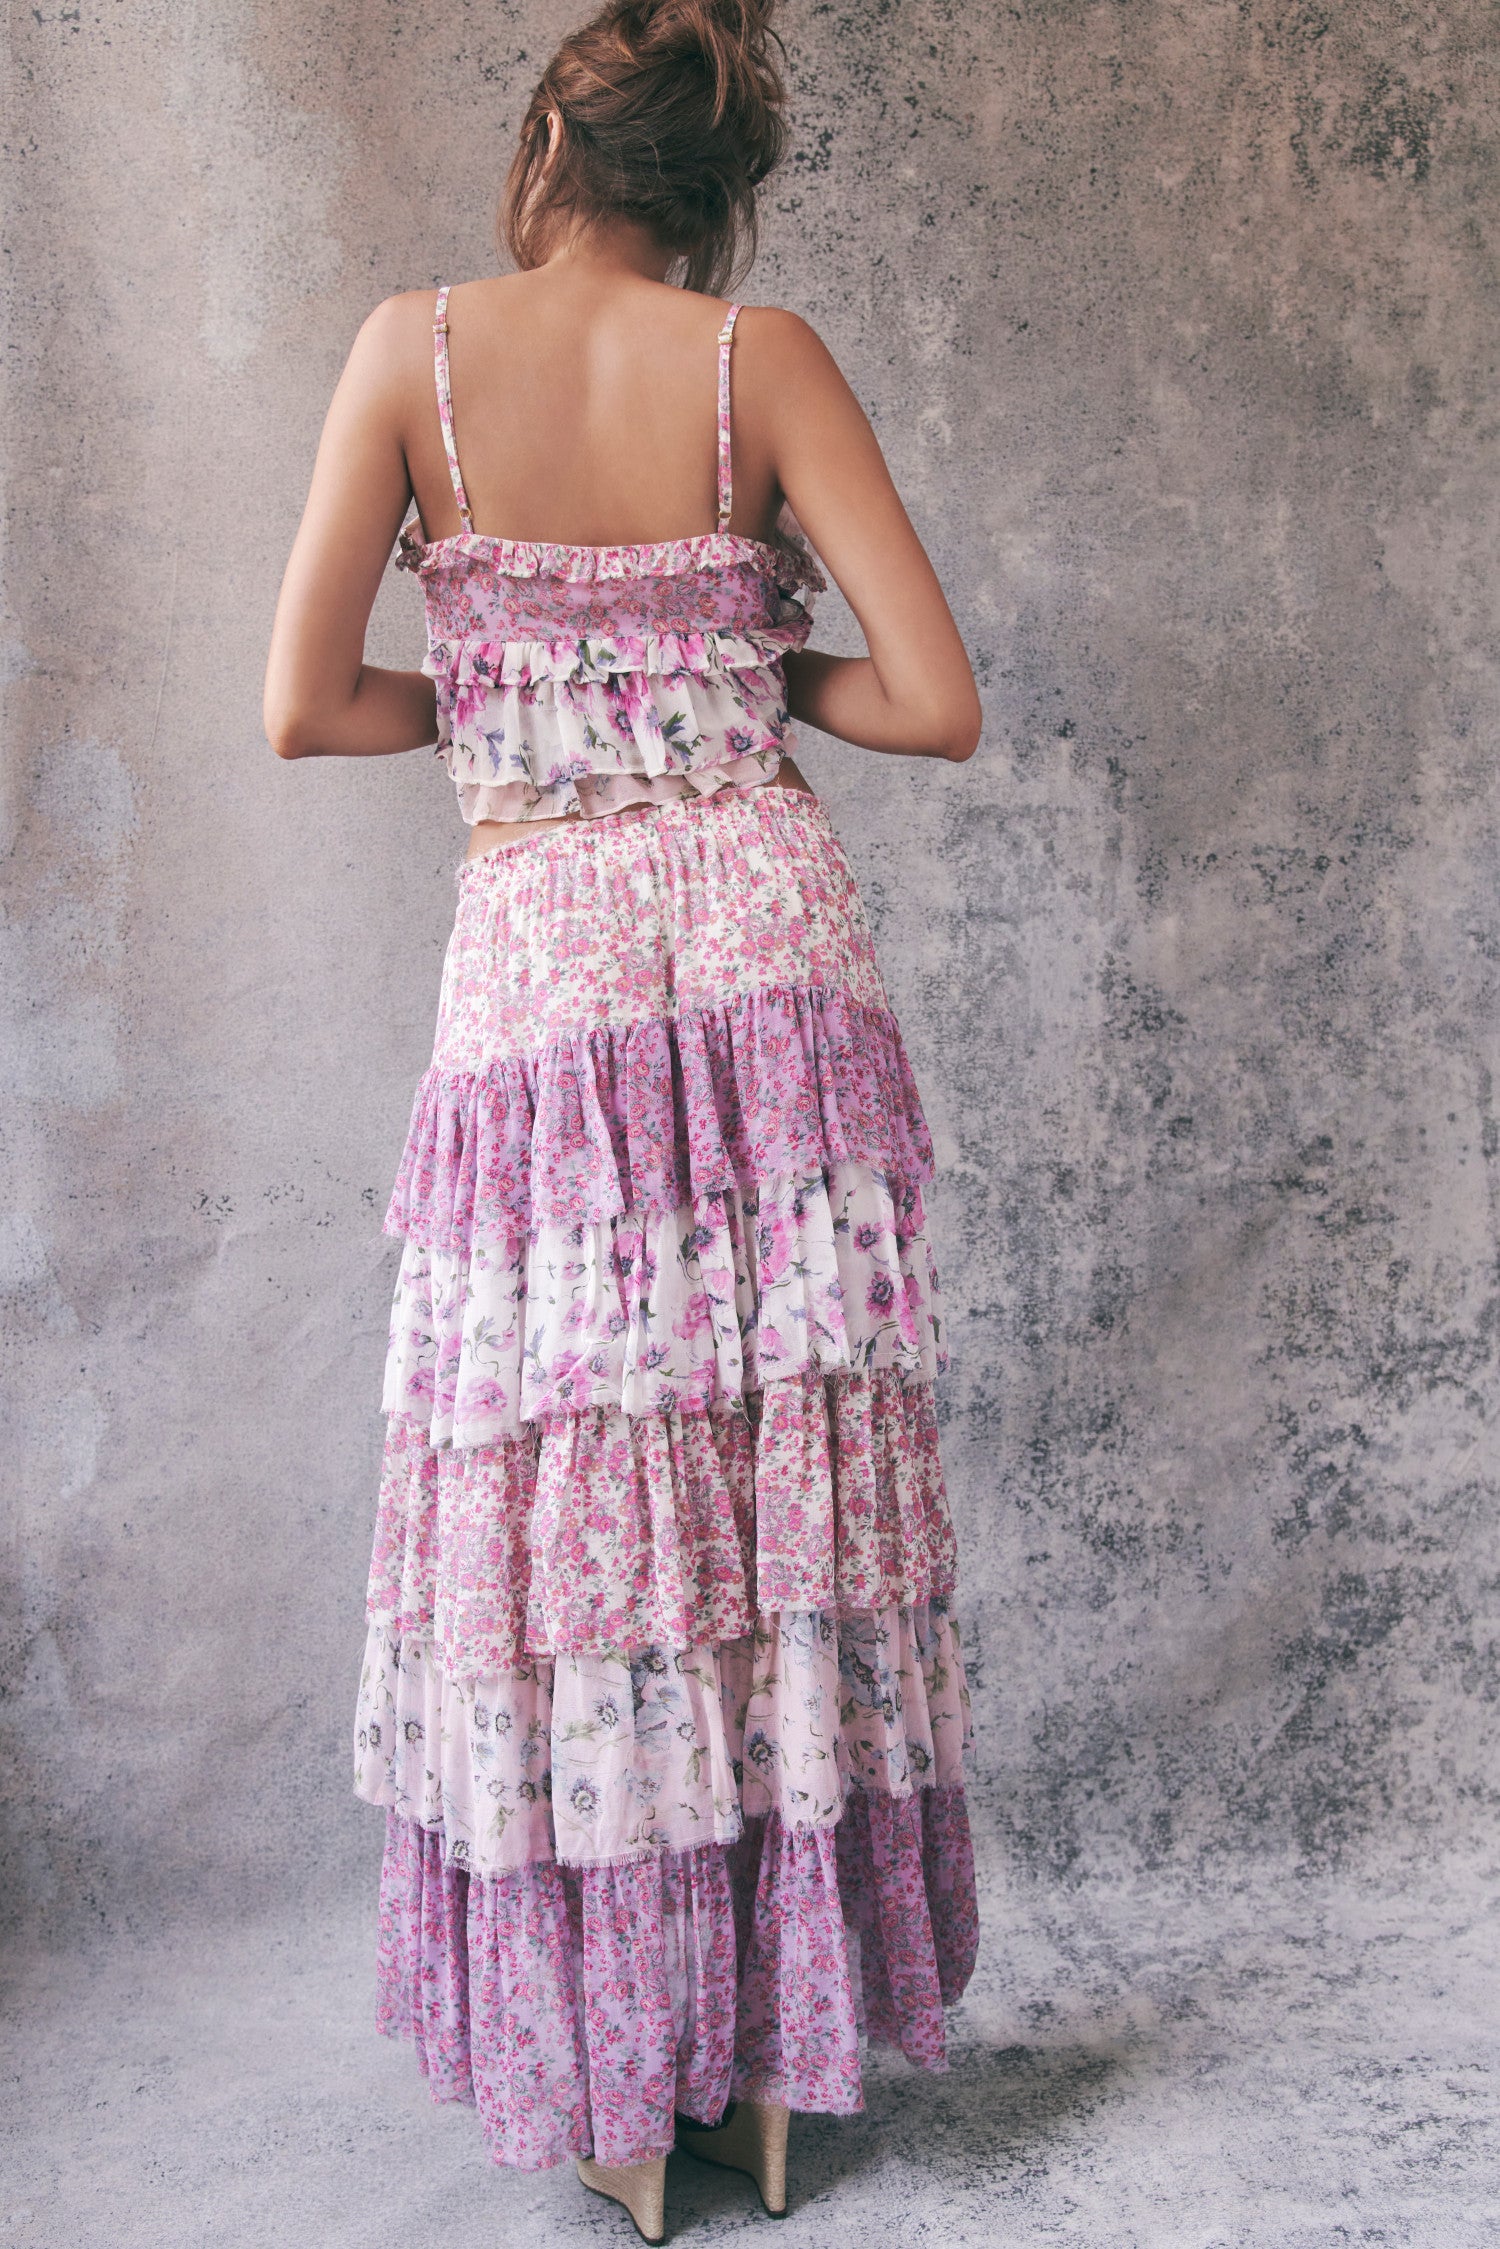 Back image of model wearing pink ruffle maxi skirt - DUSTRYROSEMEDLEY